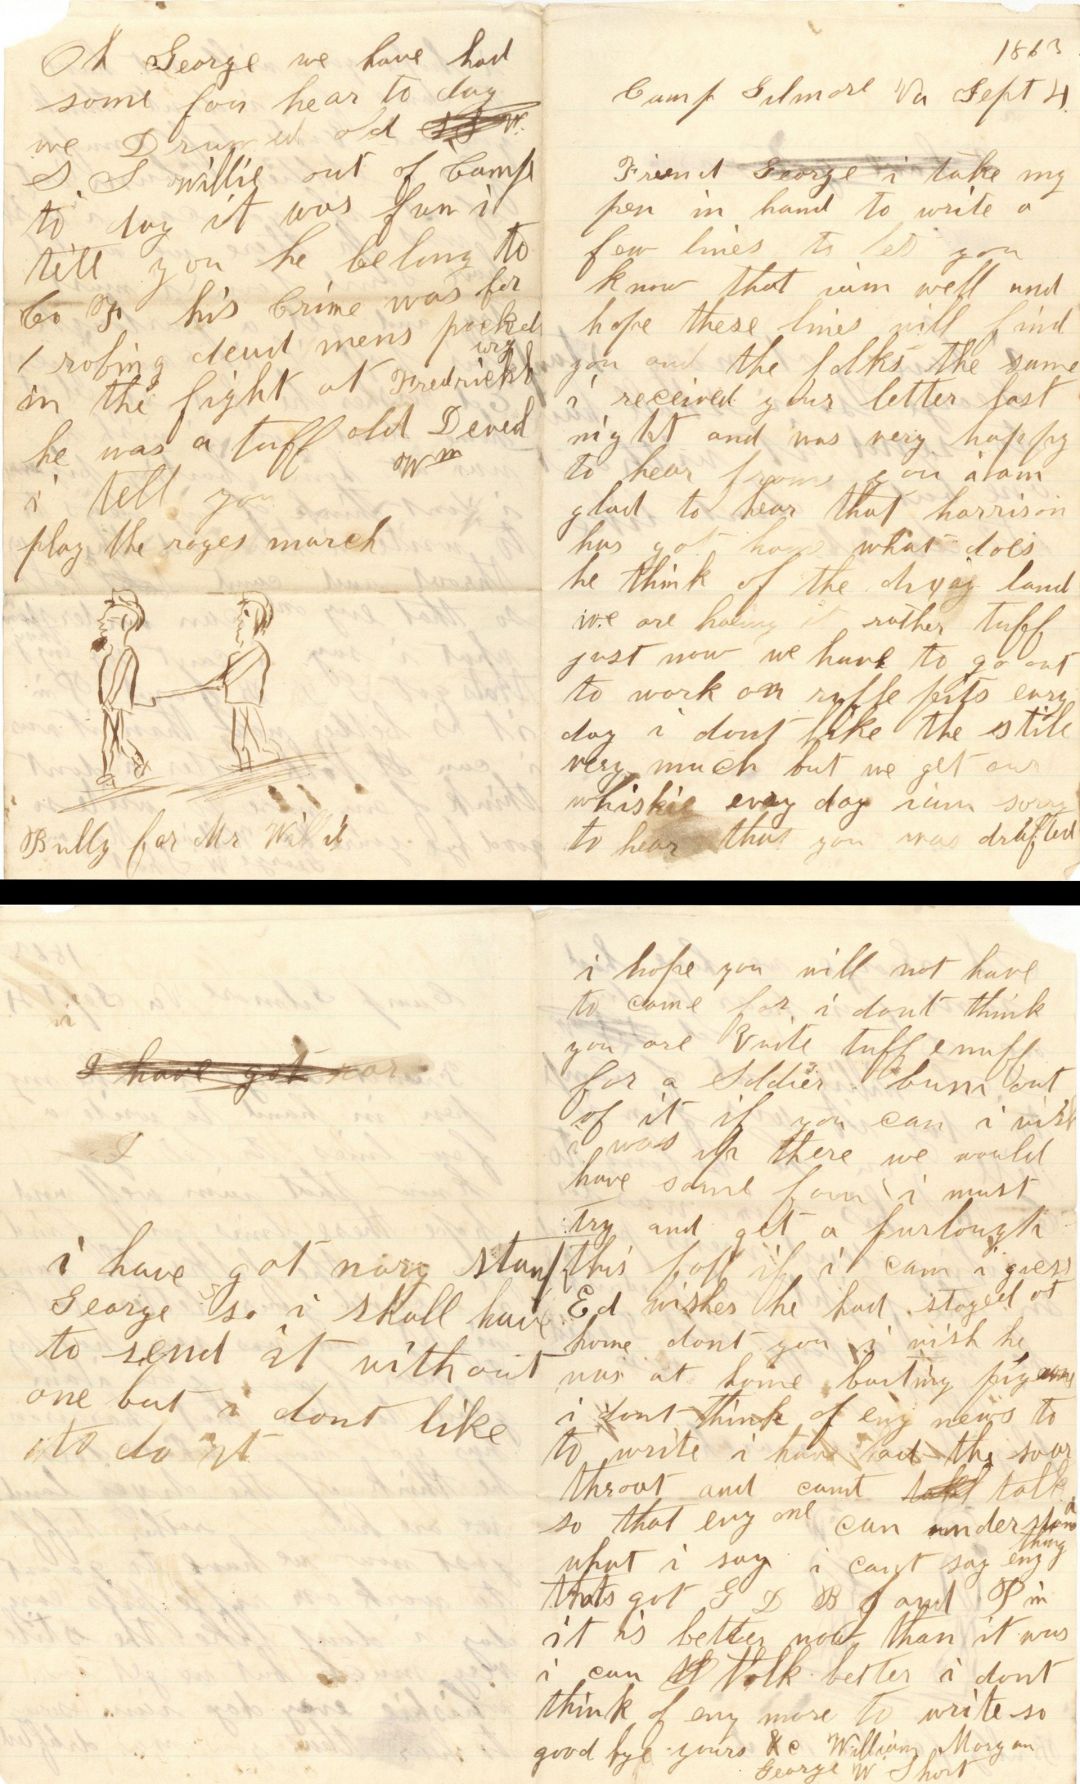 Camp Gilmore Civil War Soldiers Letter - Civil War Documents